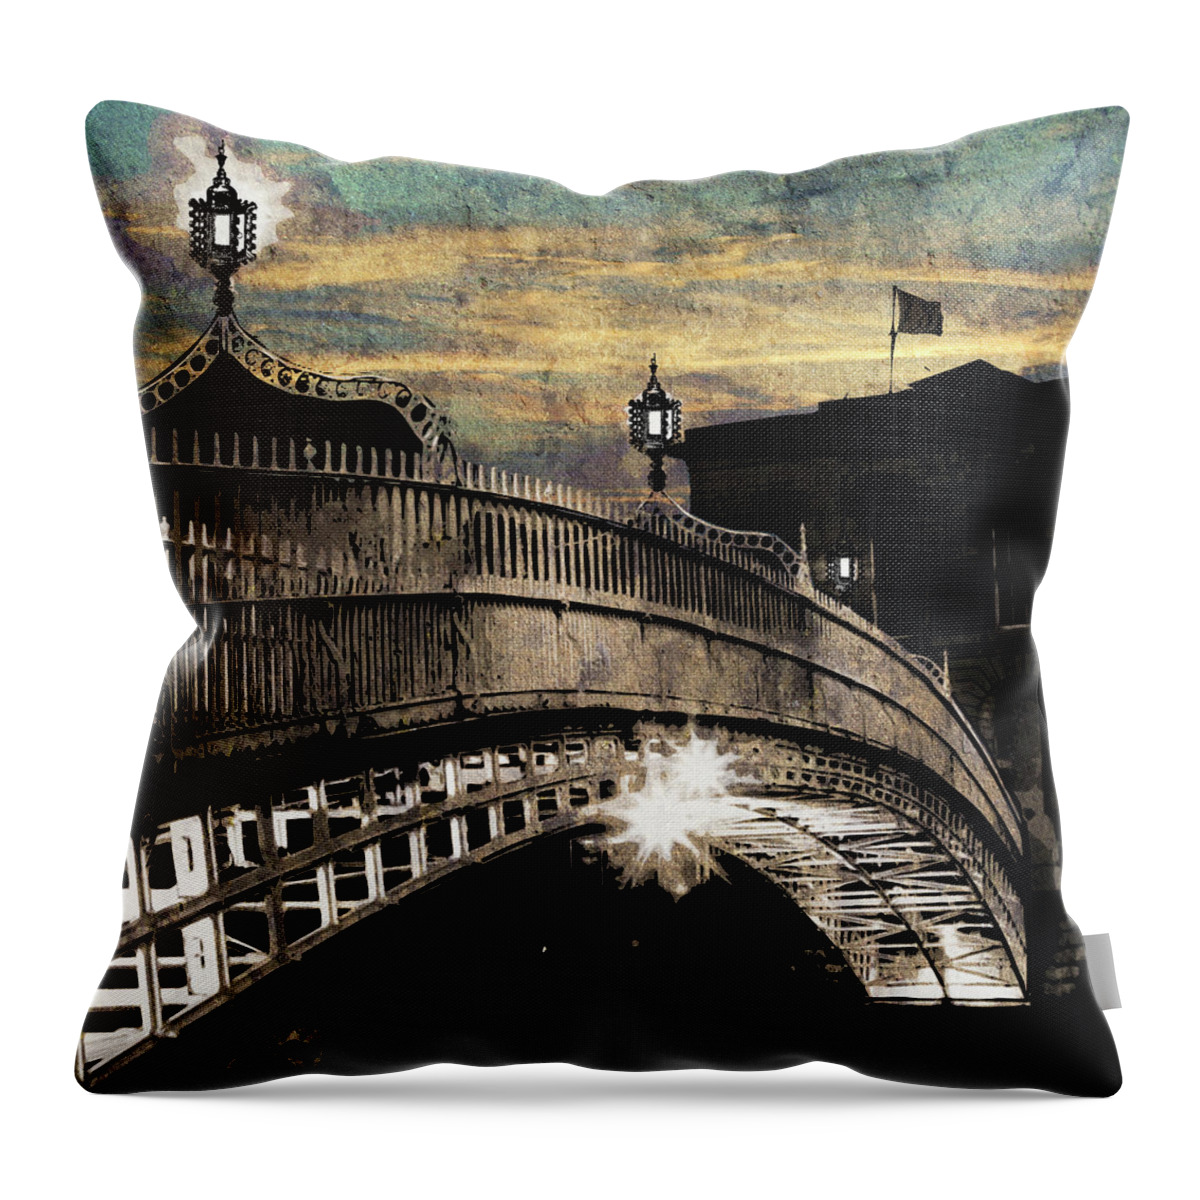 Jason Casteel Throw Pillow featuring the digital art Bridge III by Jason Casteel